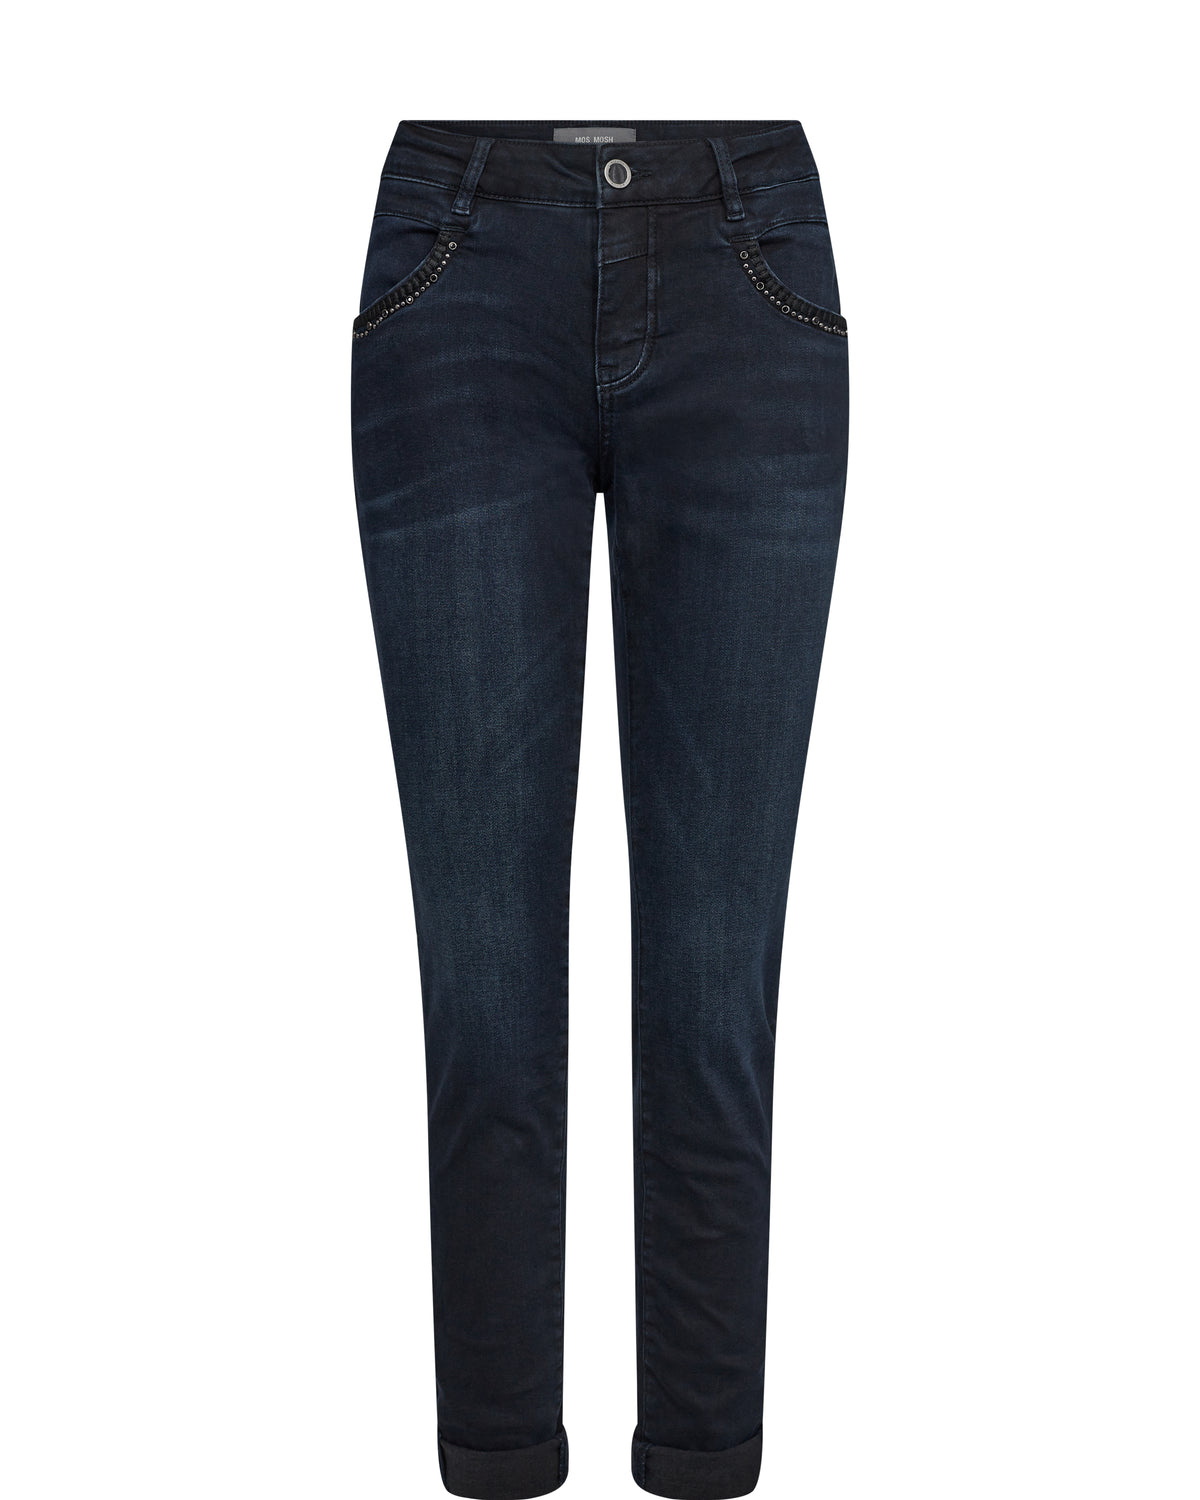 Dark blue wash slim skinny jeans with small silver metallic studs on pockets